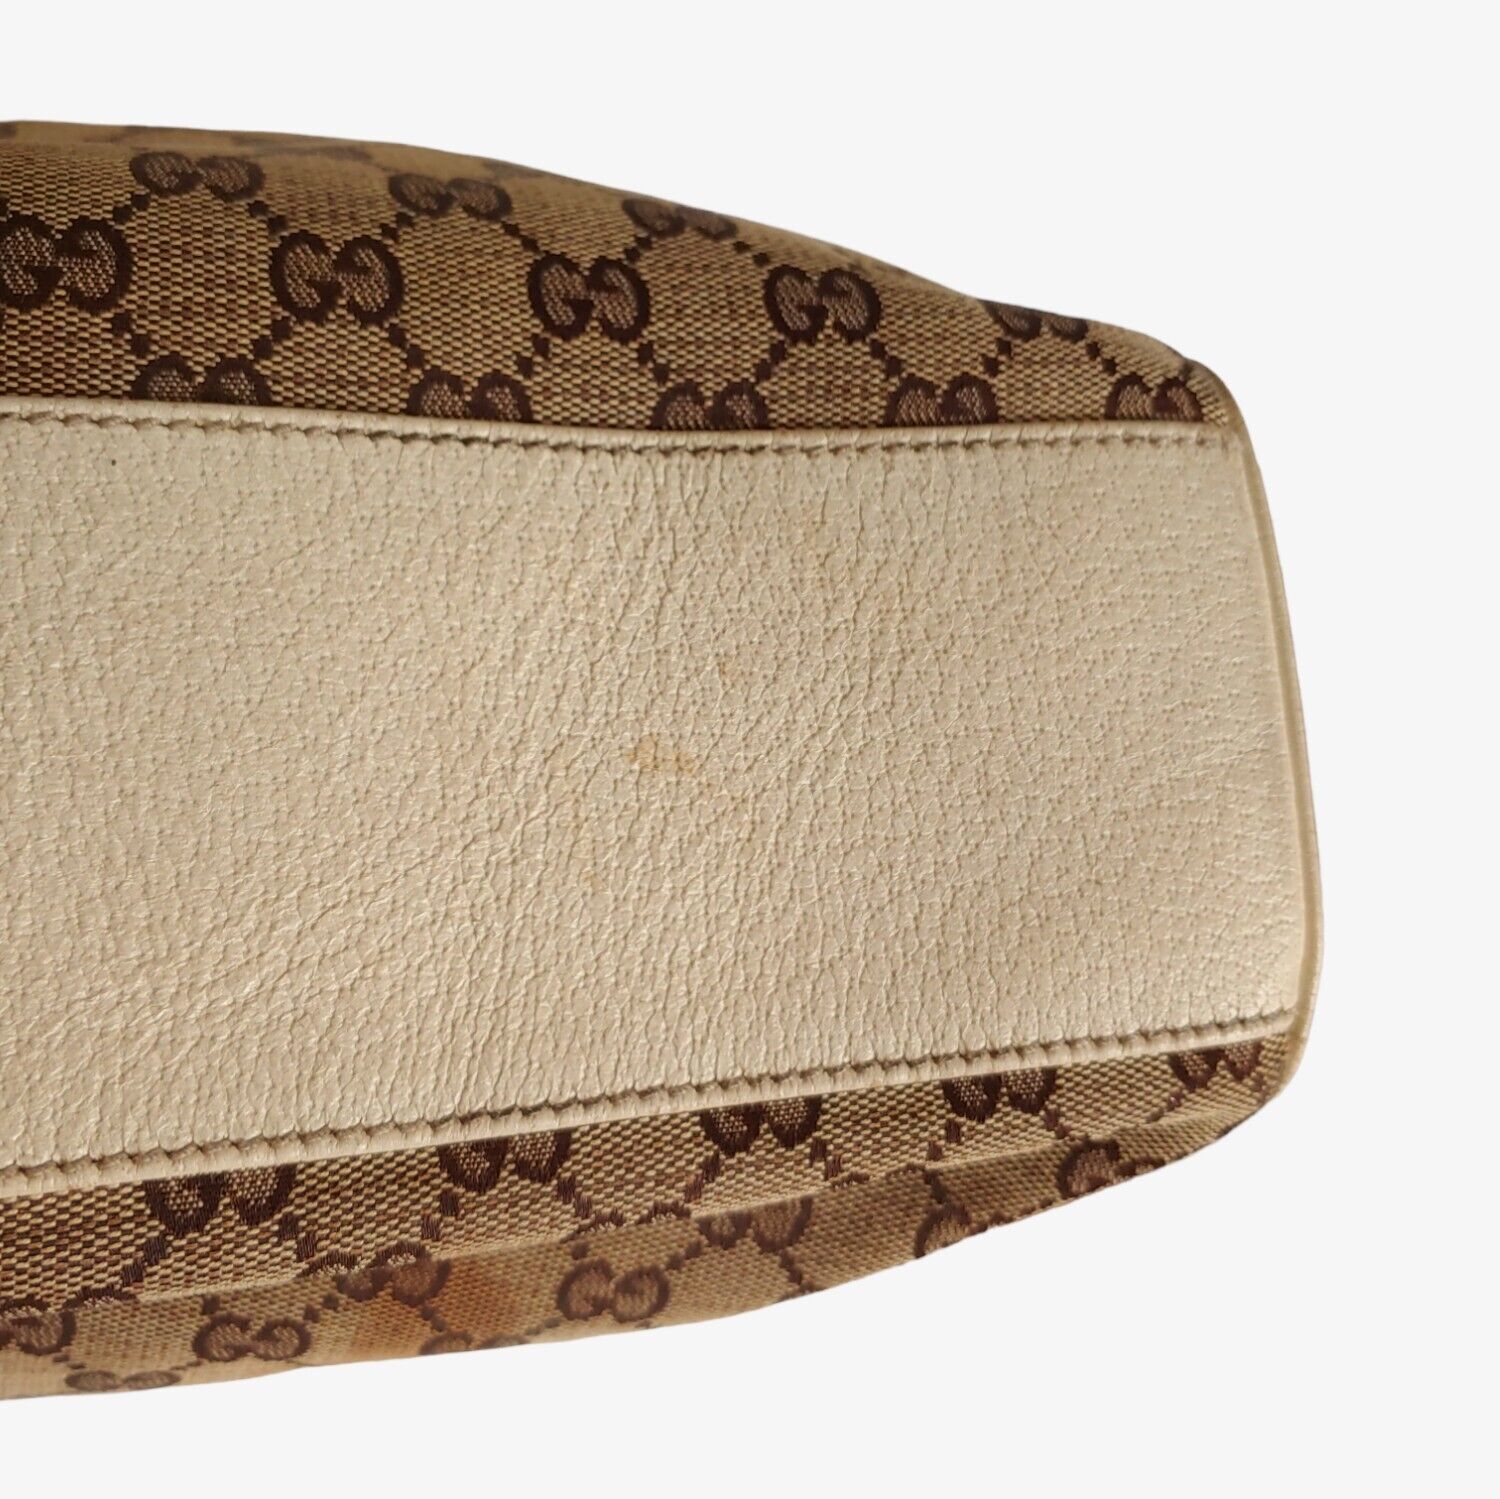 Vintage 90s Gucci GG Canvas Shoulder Handbag With Leather Handles 154981001998 Button Mark- Casspios Dream